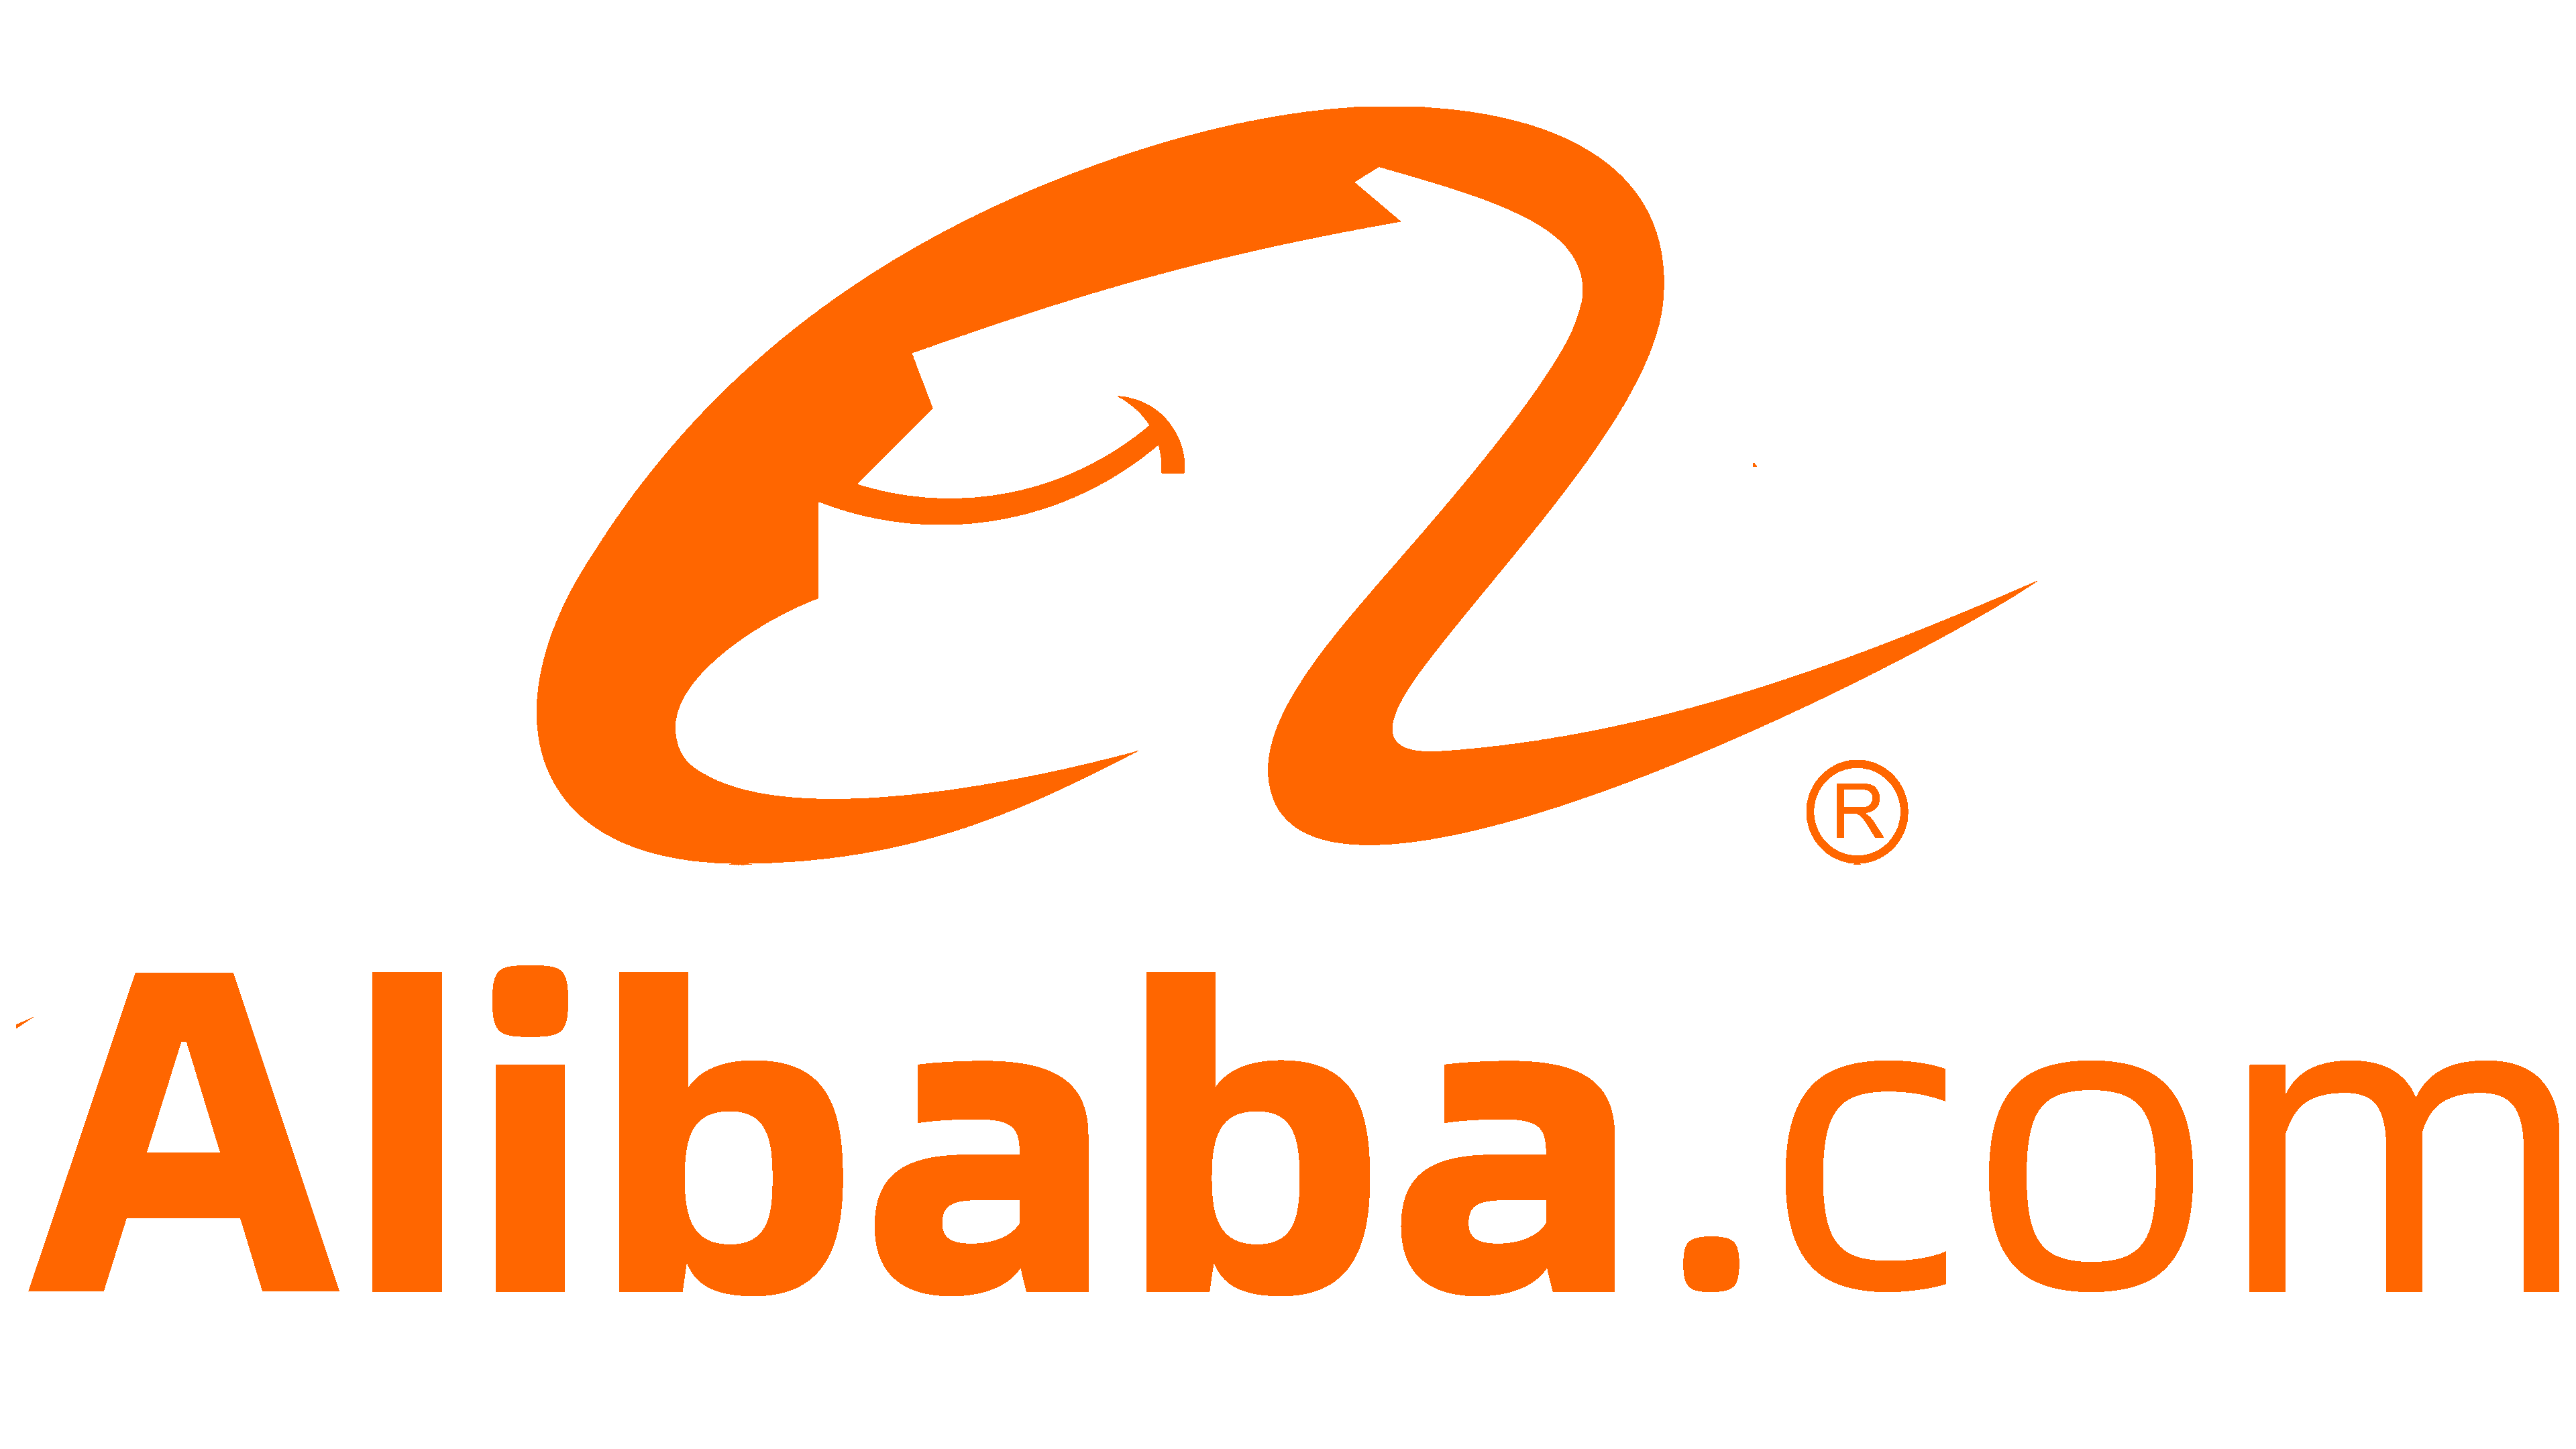 Alibaba Emblem